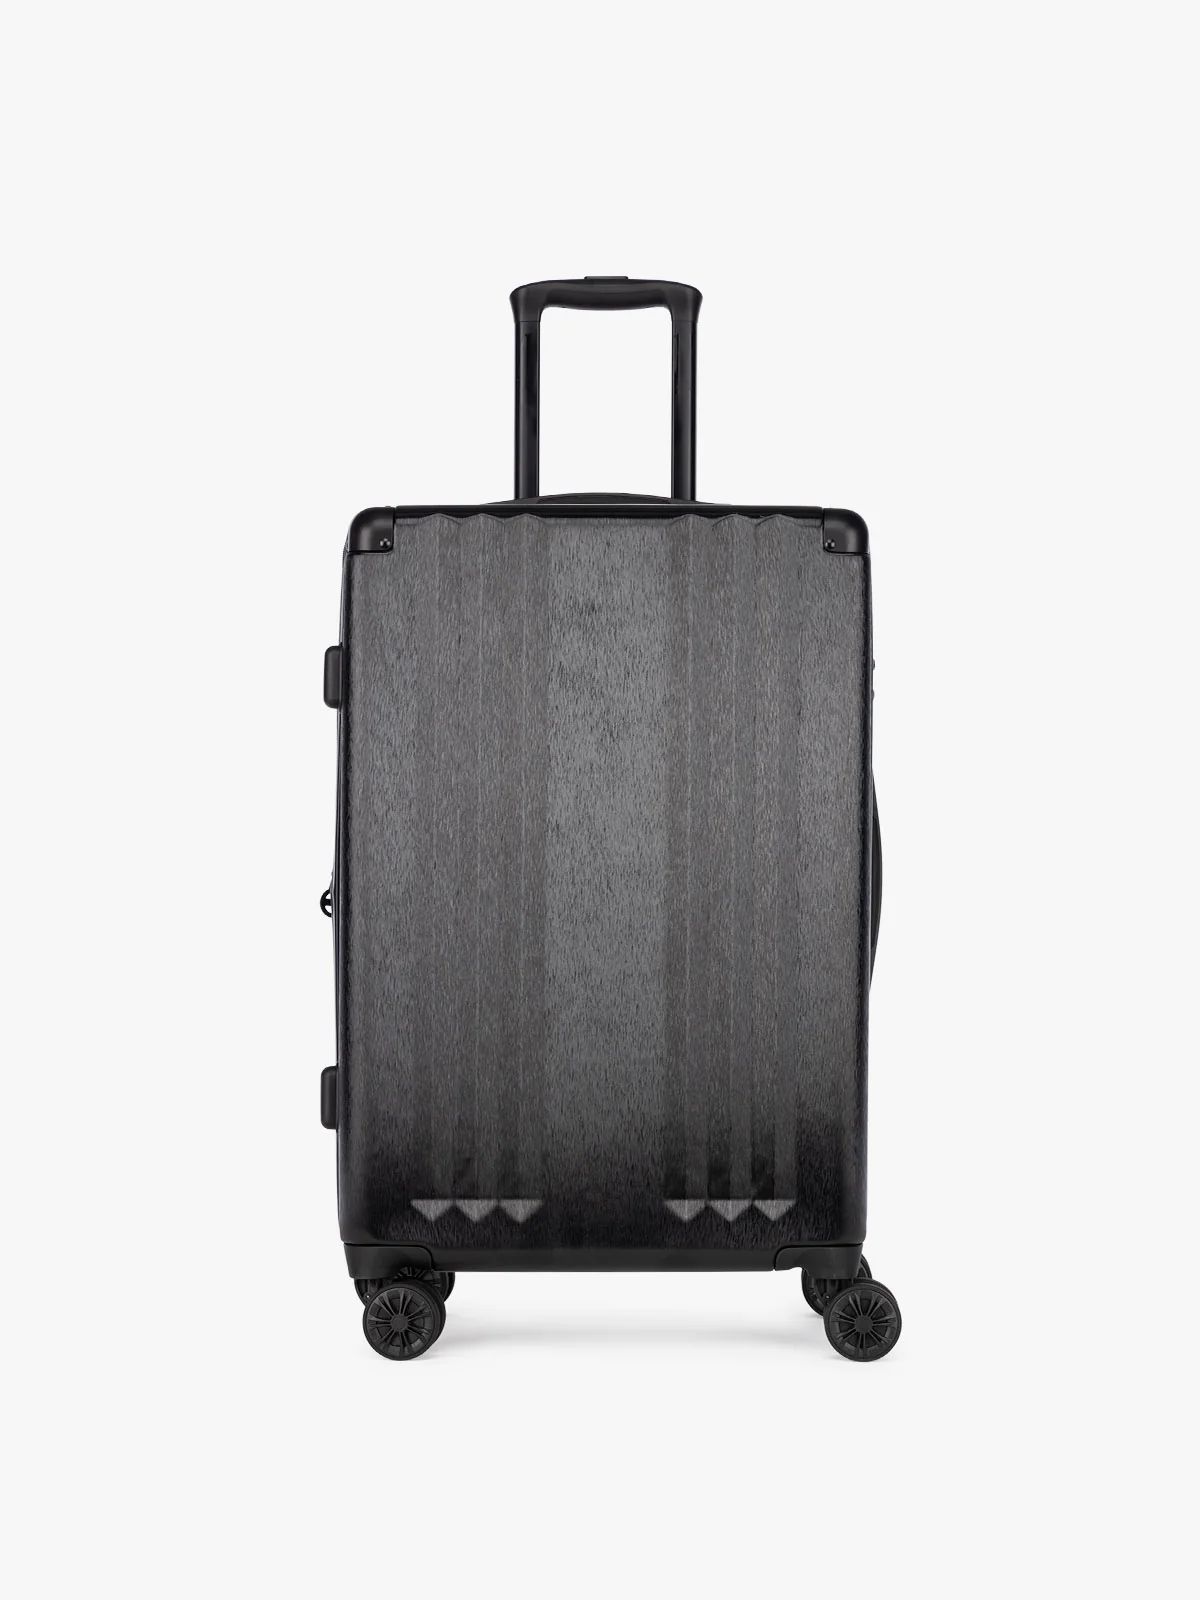 Ambeur Medium Luggage | CALPAK | CALPAK Travel